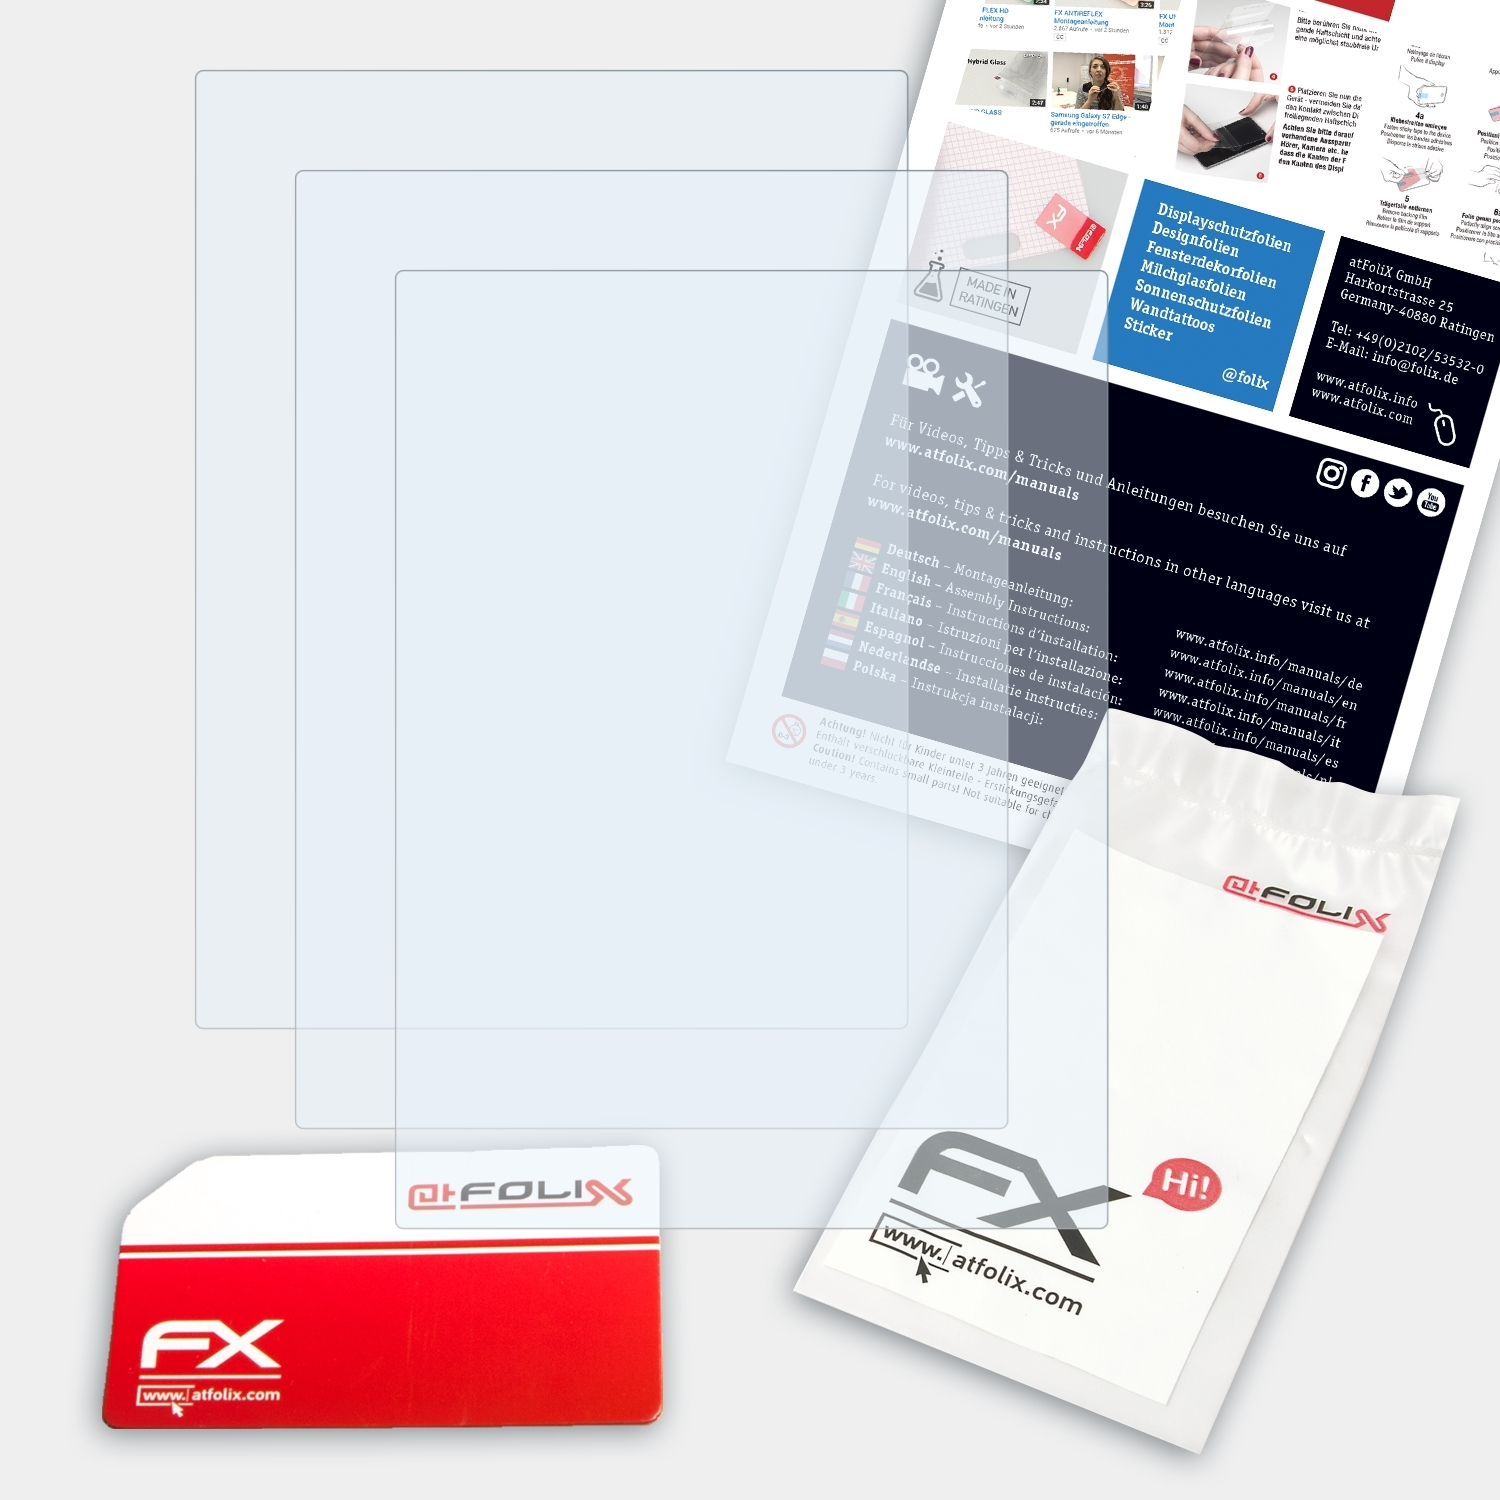 ATFOLIX 3x FX-Clear Displayschutz(für 32) IBEX Falk